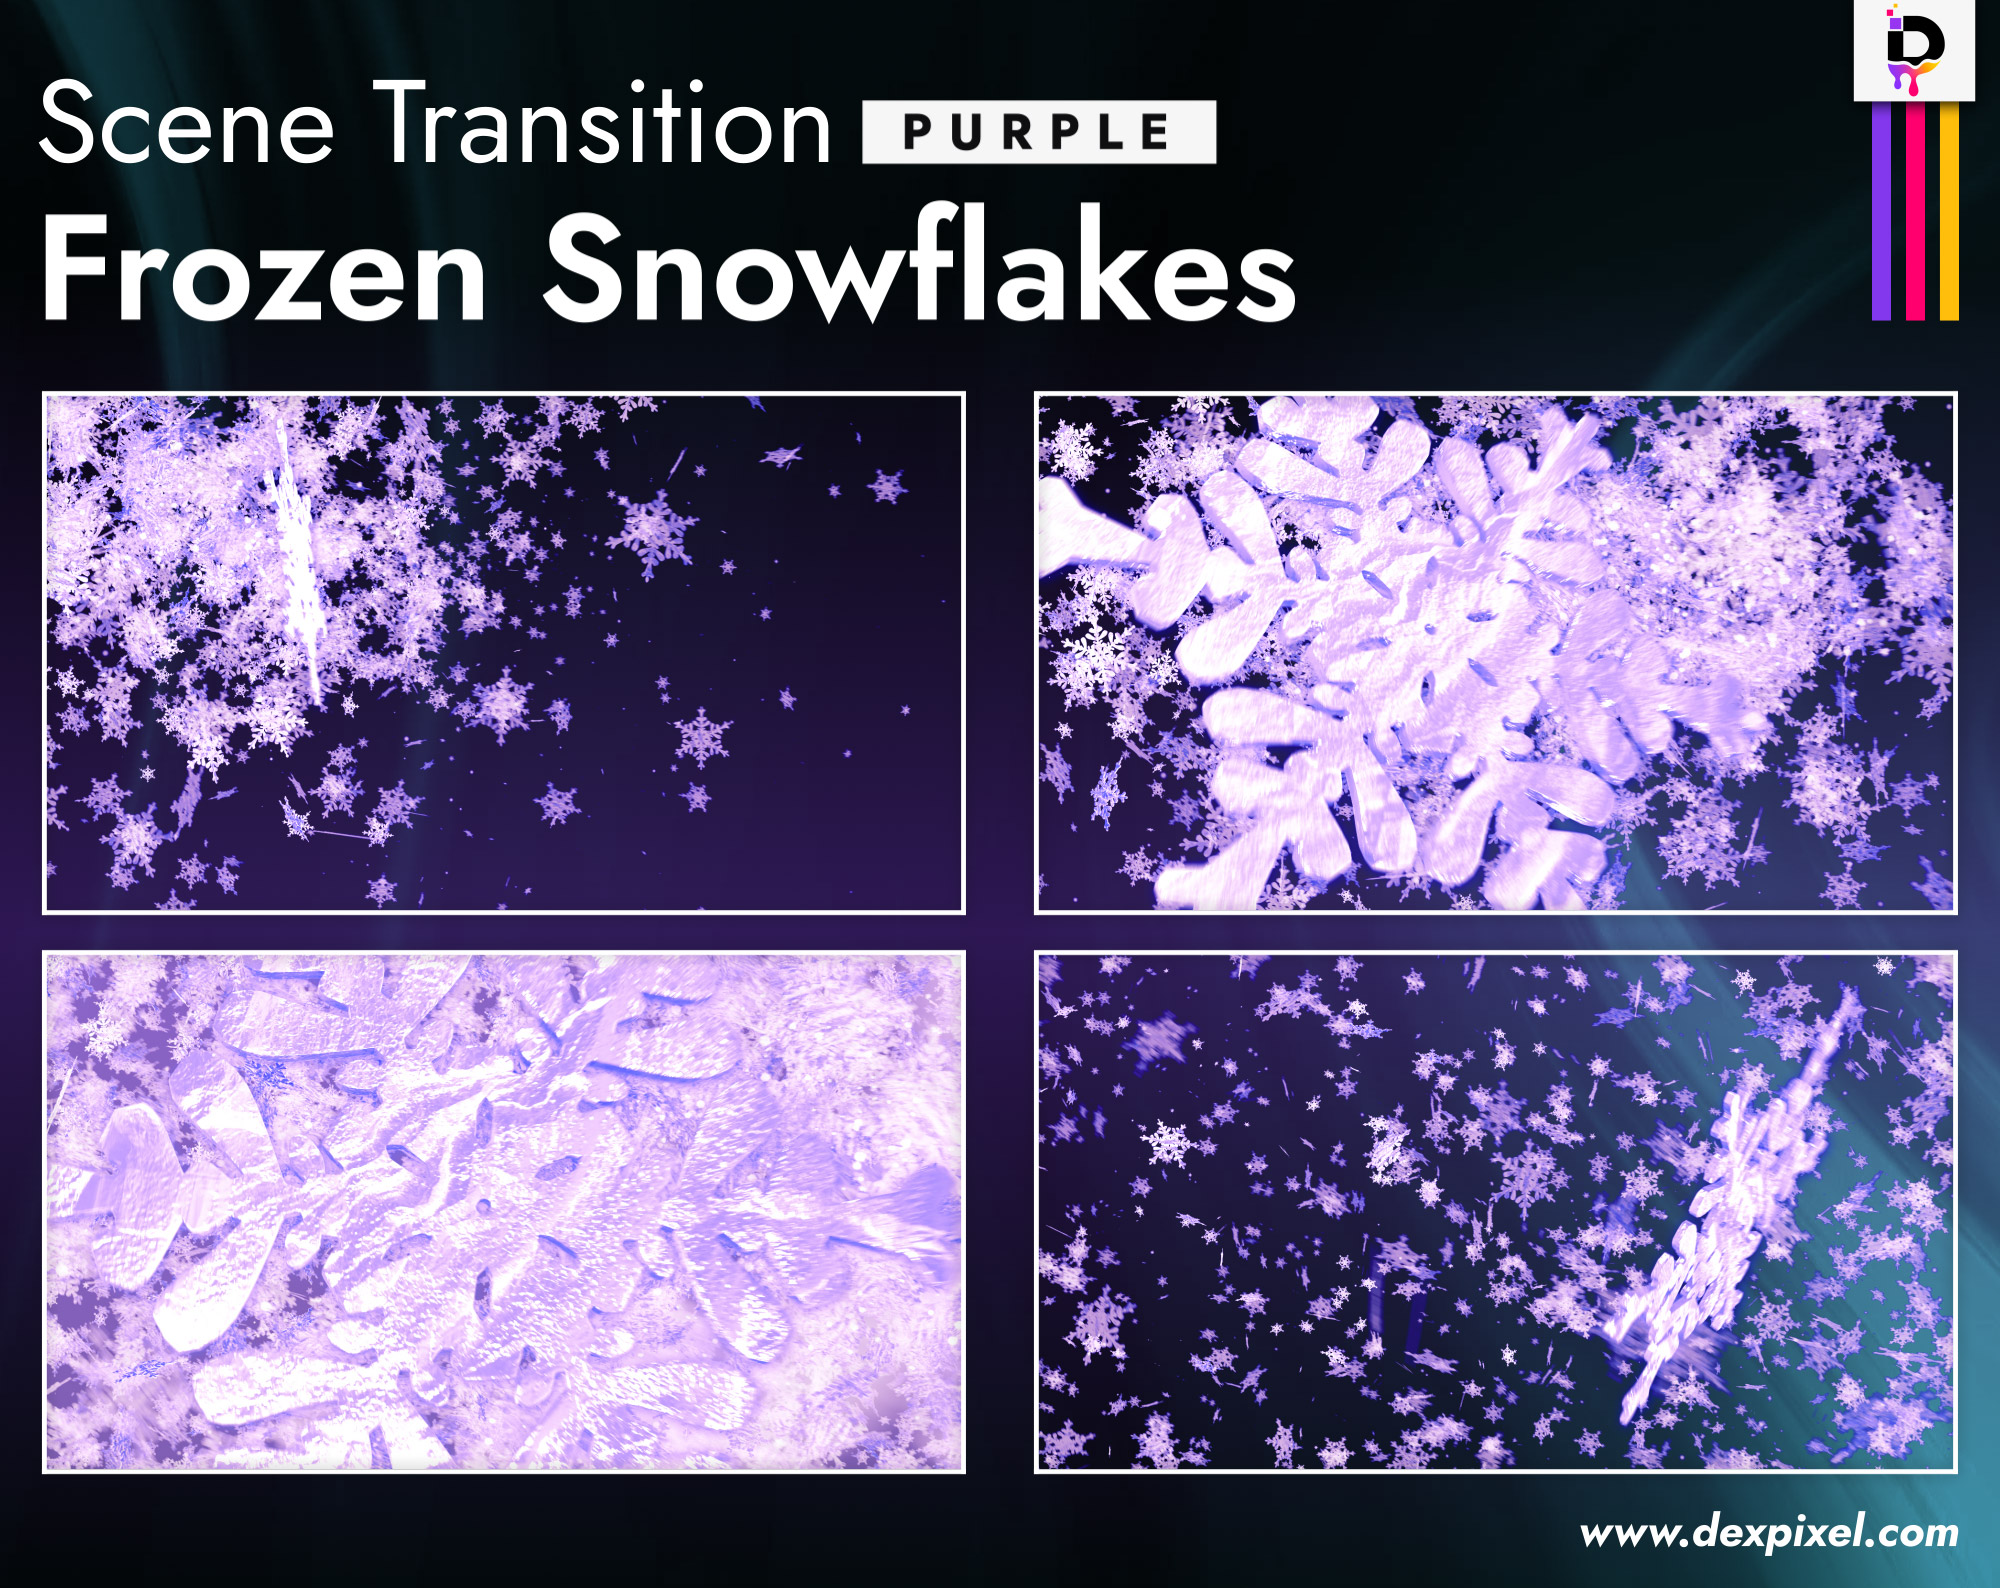 Scene Transition Dexpixel Thumbnail Frozen Snowflakes Purple